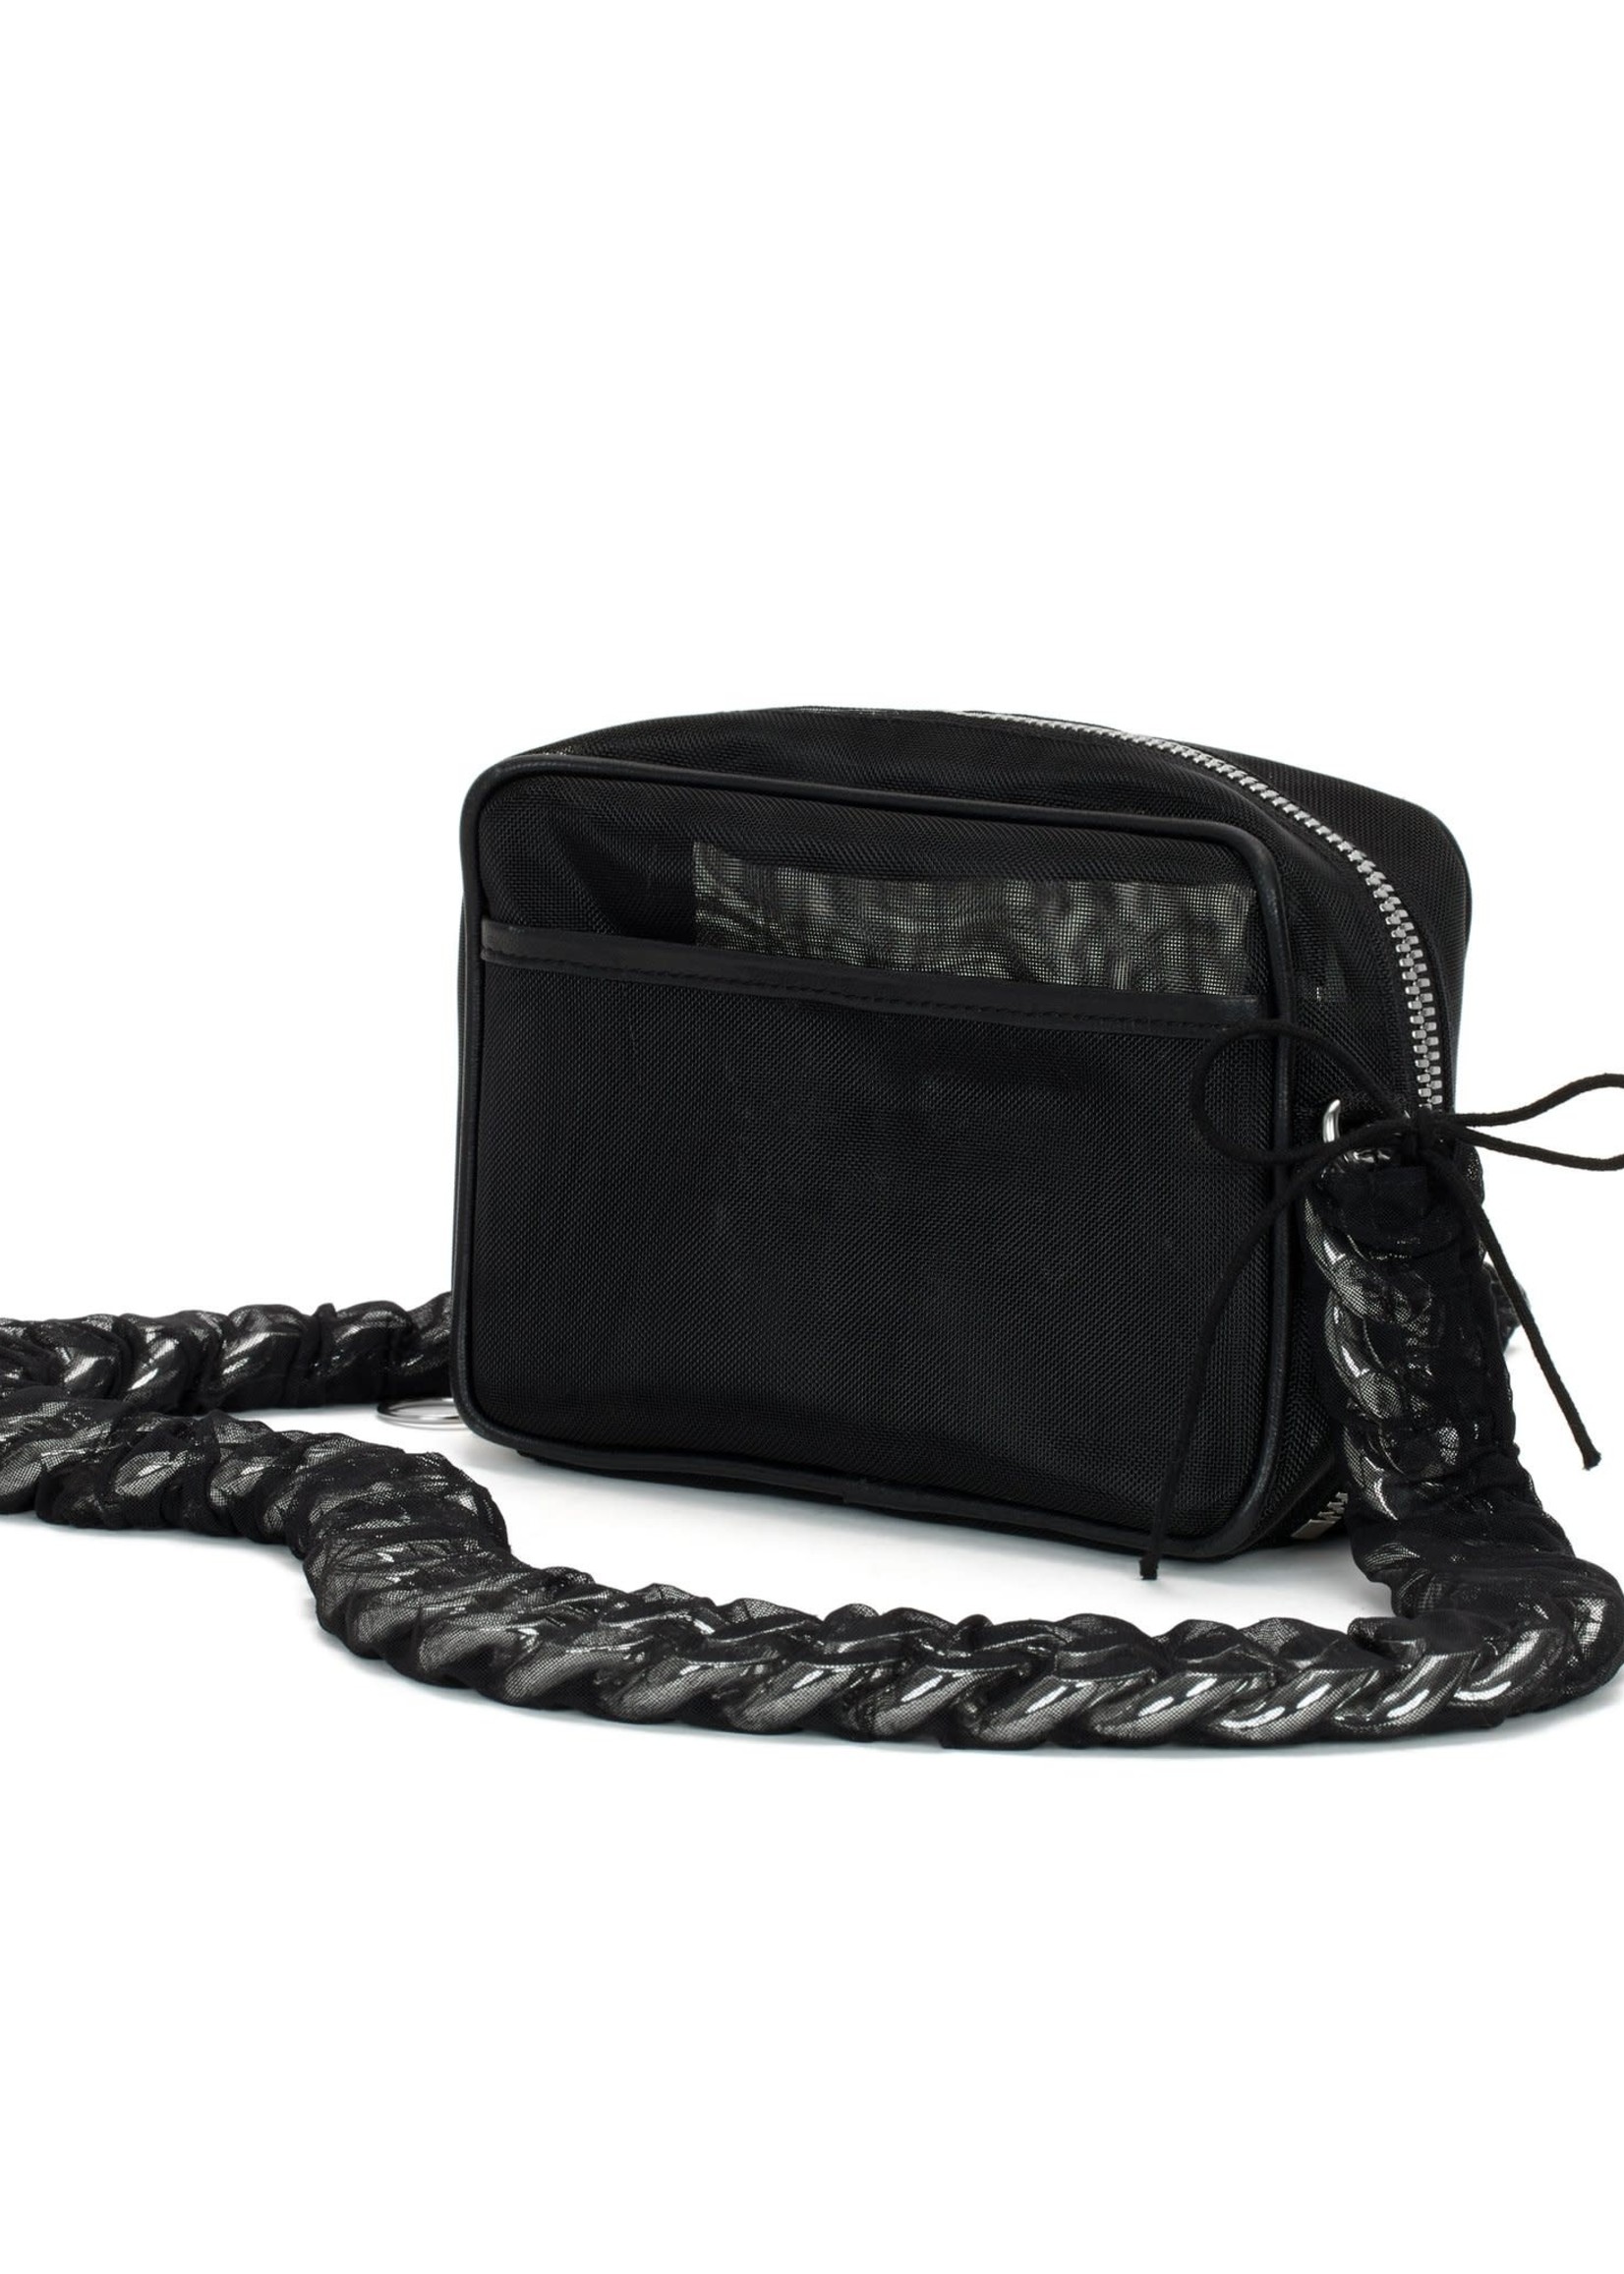 KARA Camera Bag in Black Tulle